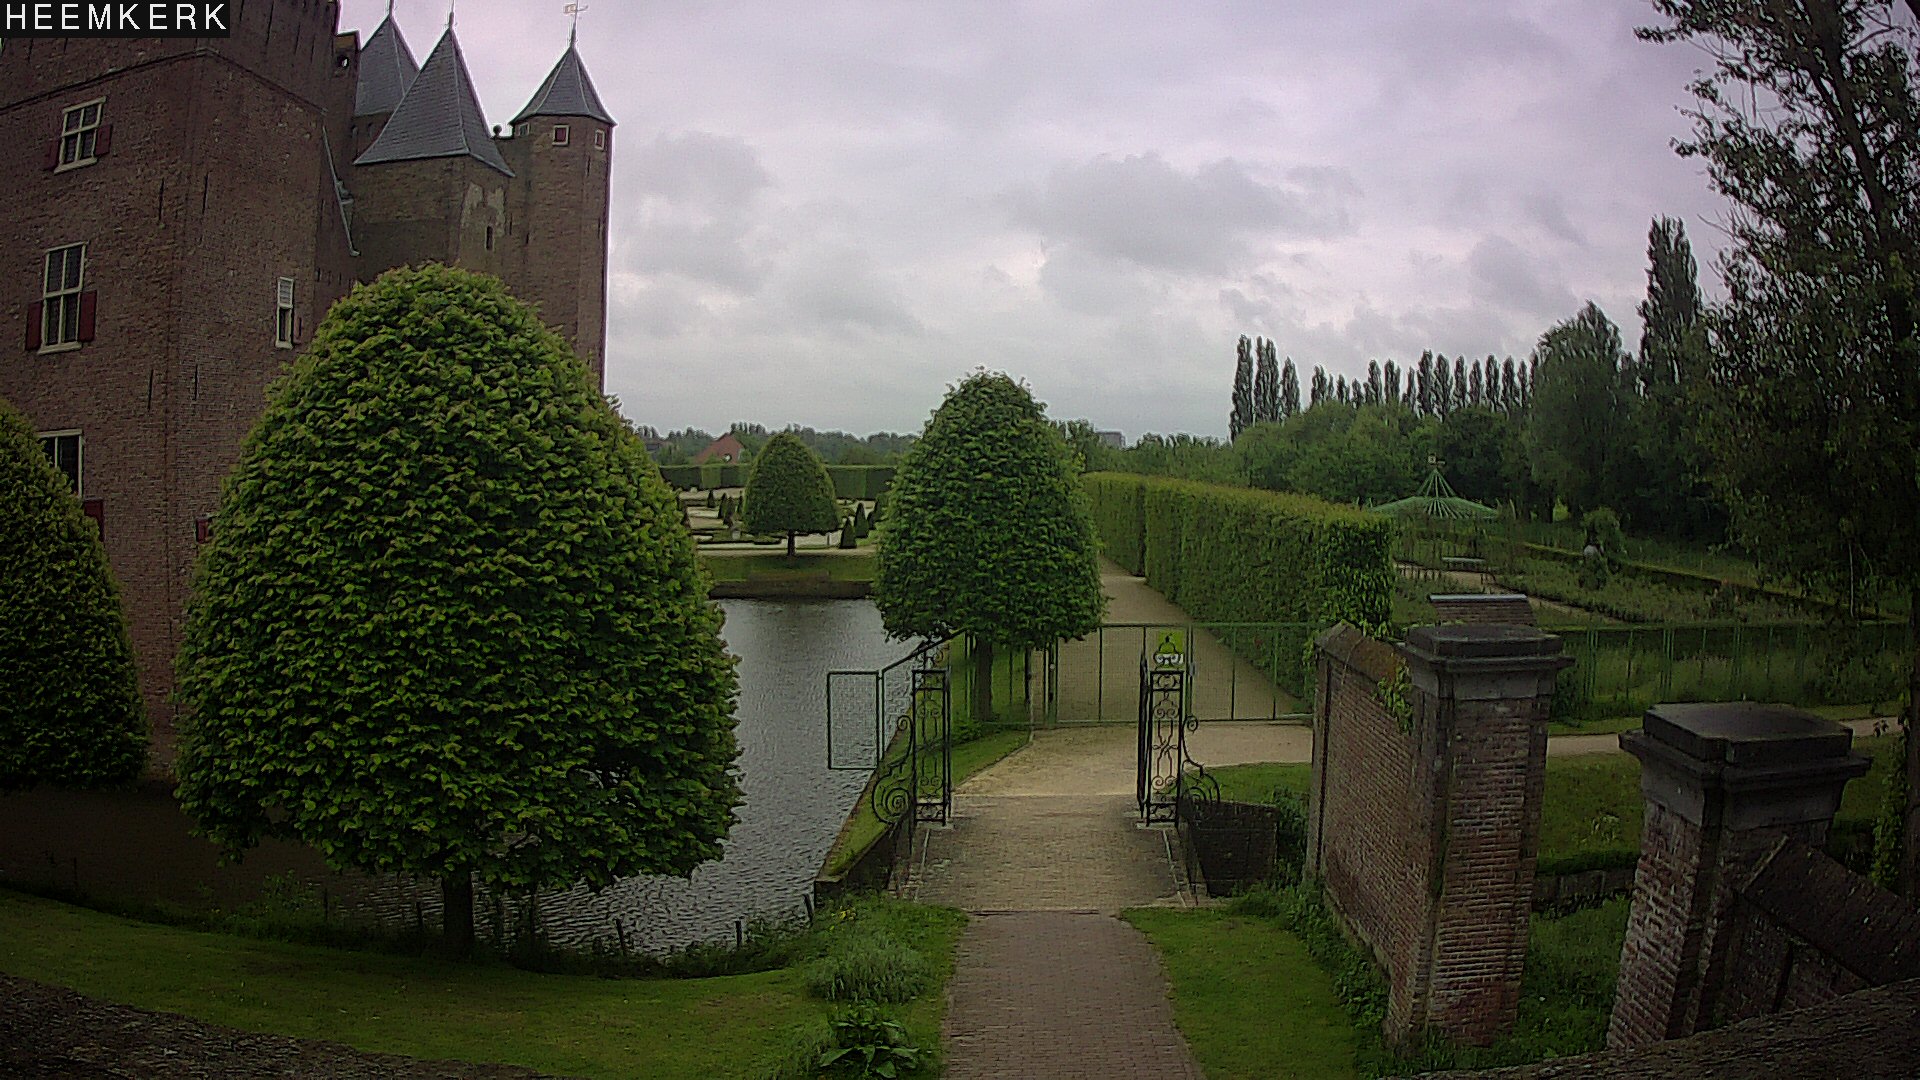 Heemskerk Tor. 07:46